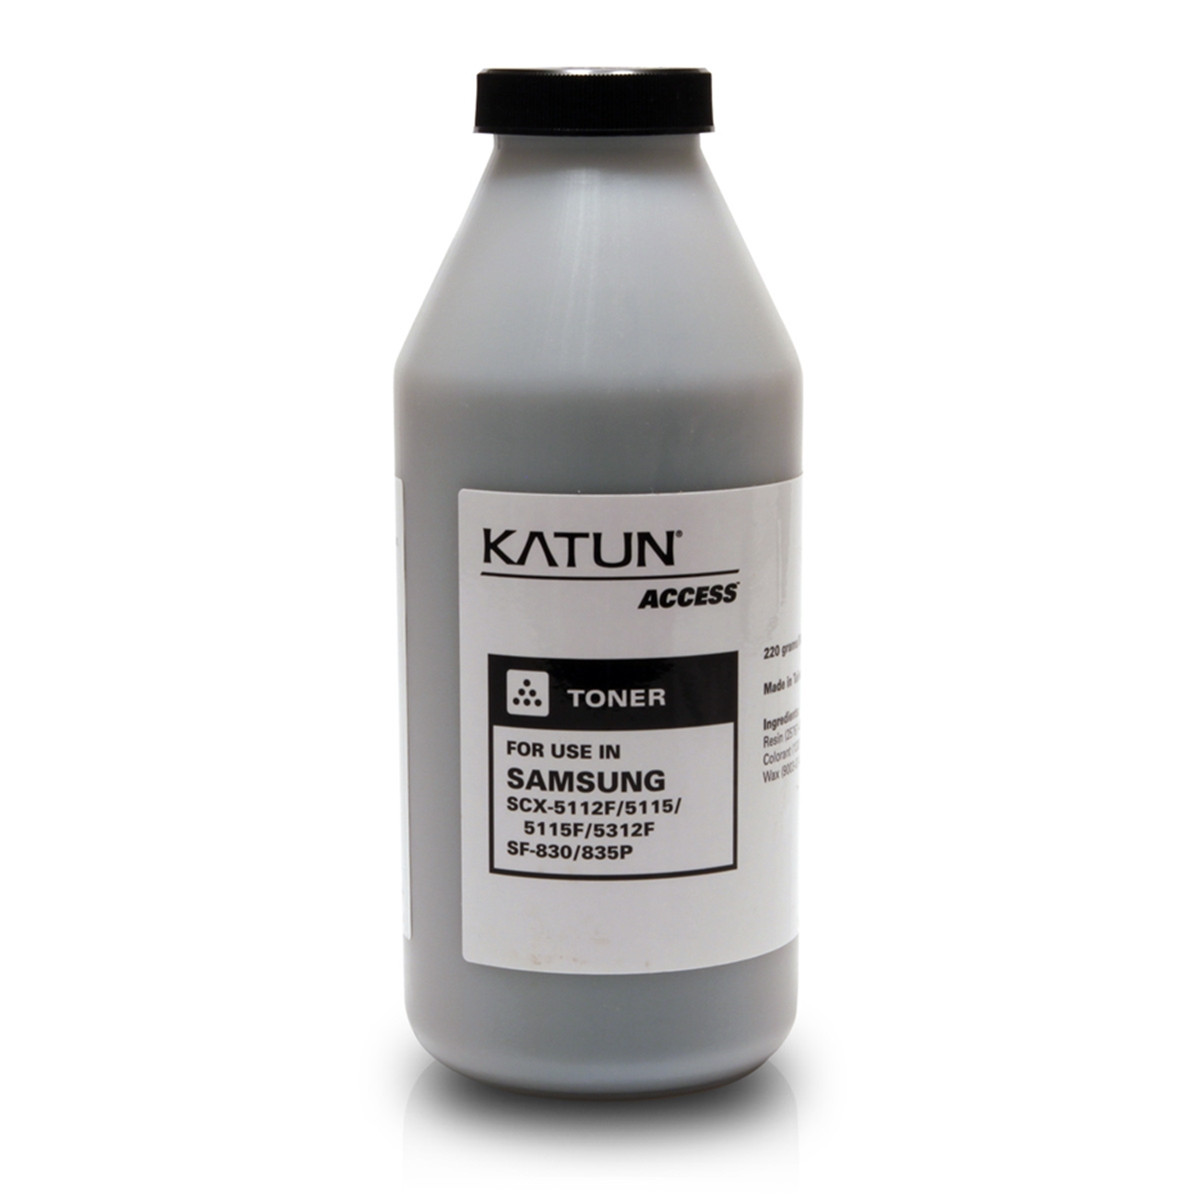 Toner Refil Kyocera KM F650 | Katun Access | 220g